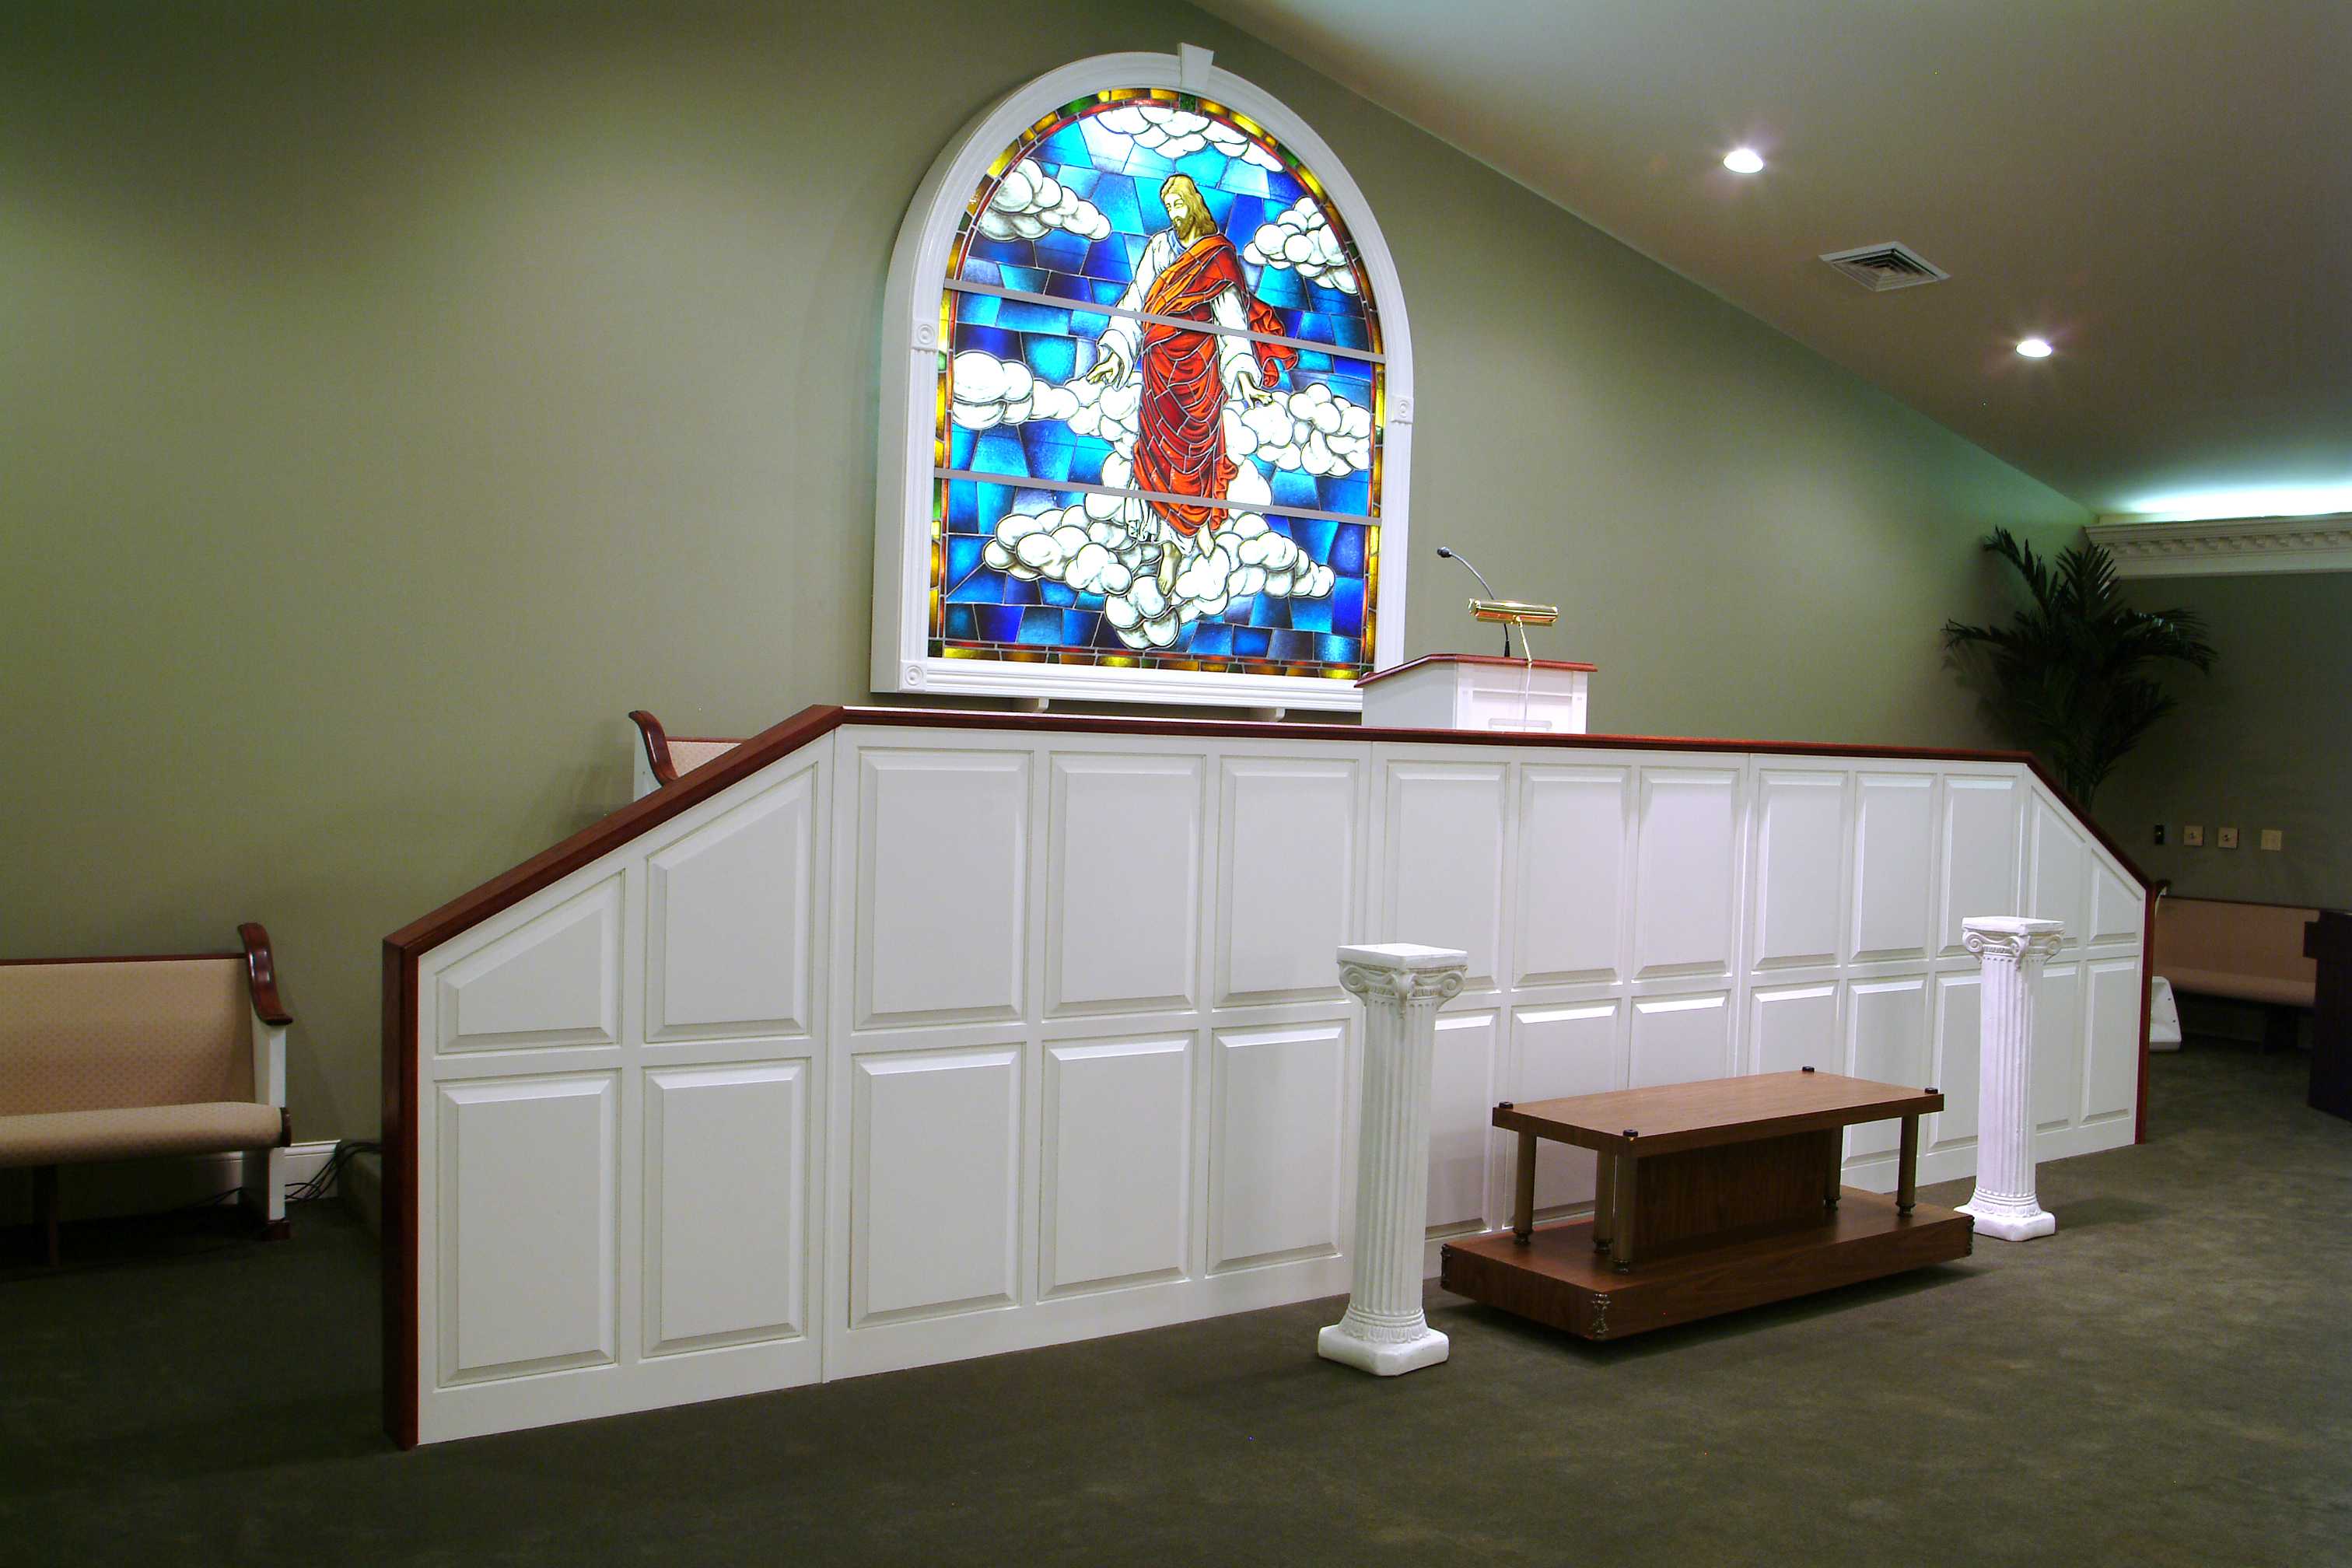 Church Steeple Design Models  Kivett's Fine Church Furniture